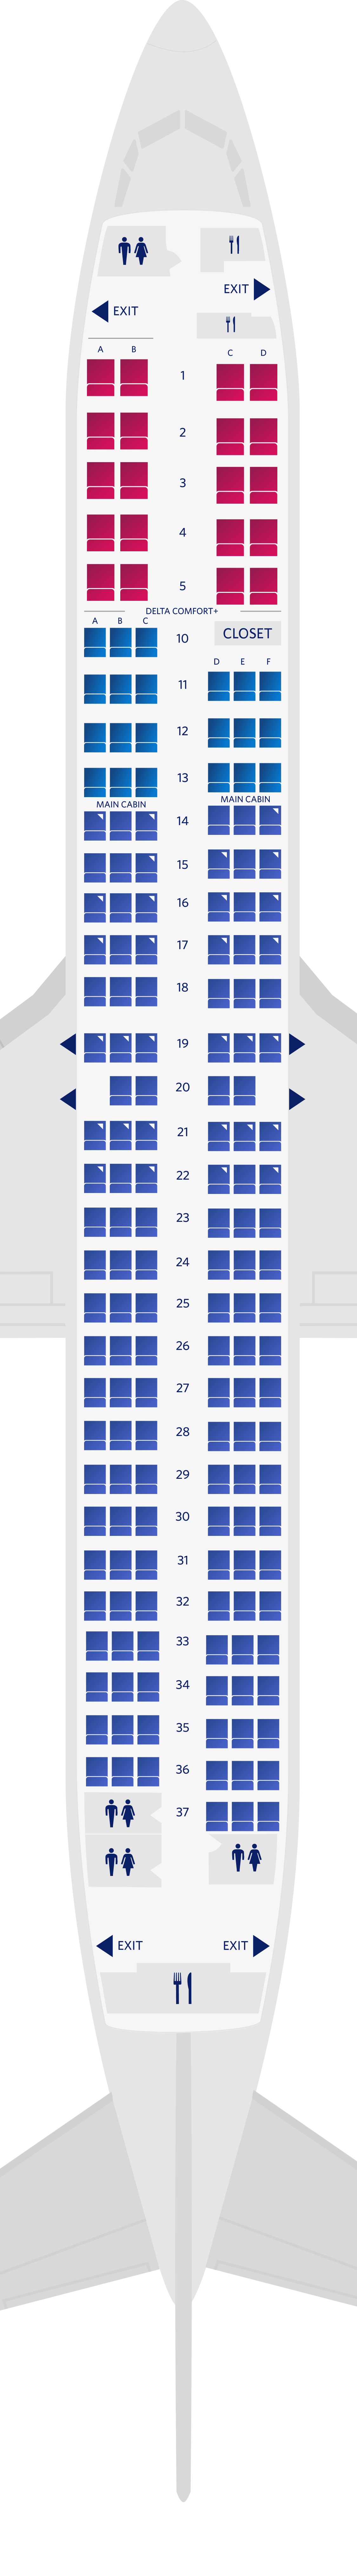 Boeing 737-900-739 seat map